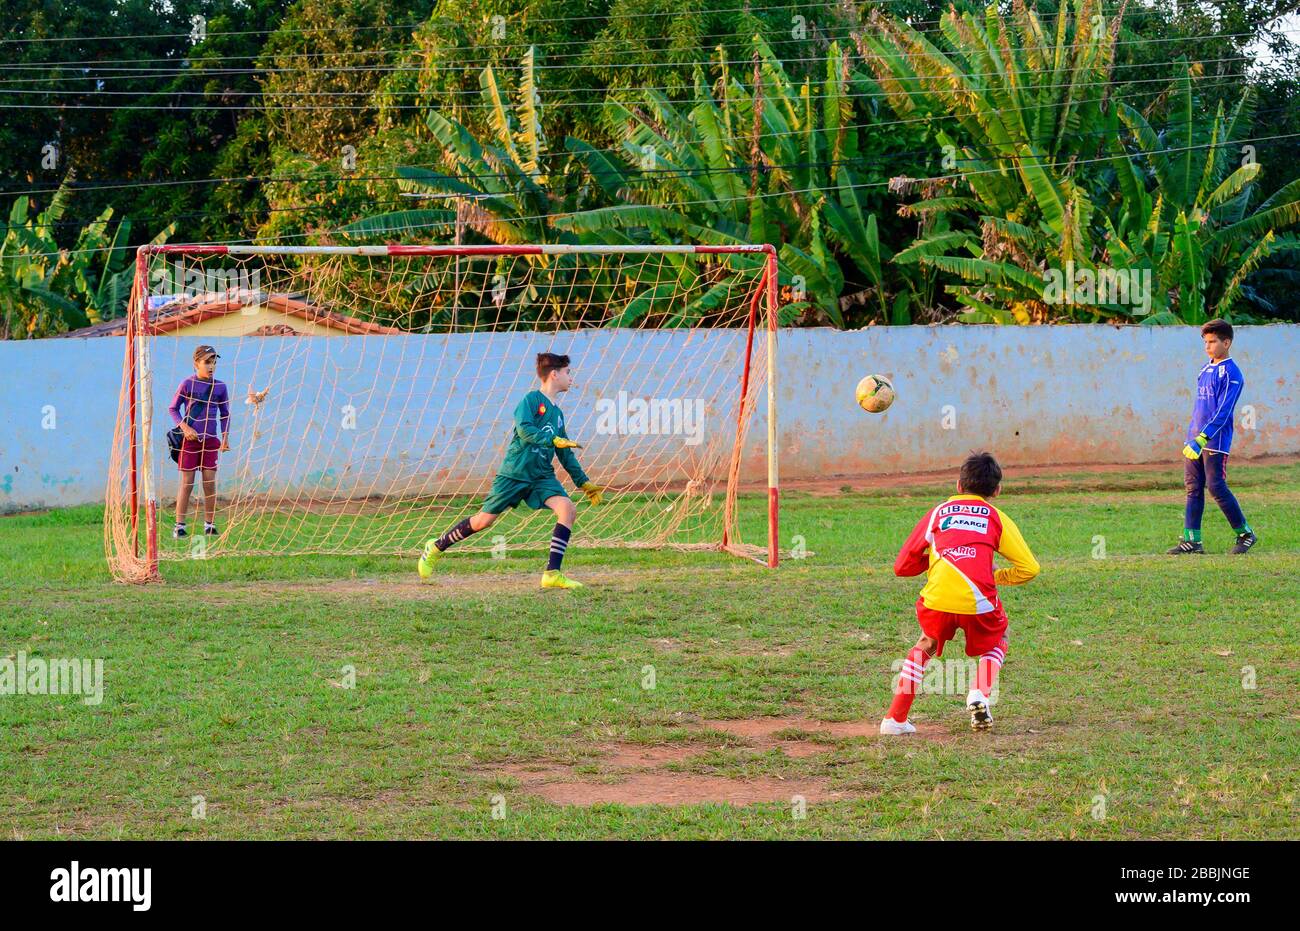 Boys playing soccer, Vinales, Pinar del Rio Province, Cuba Stock Photo